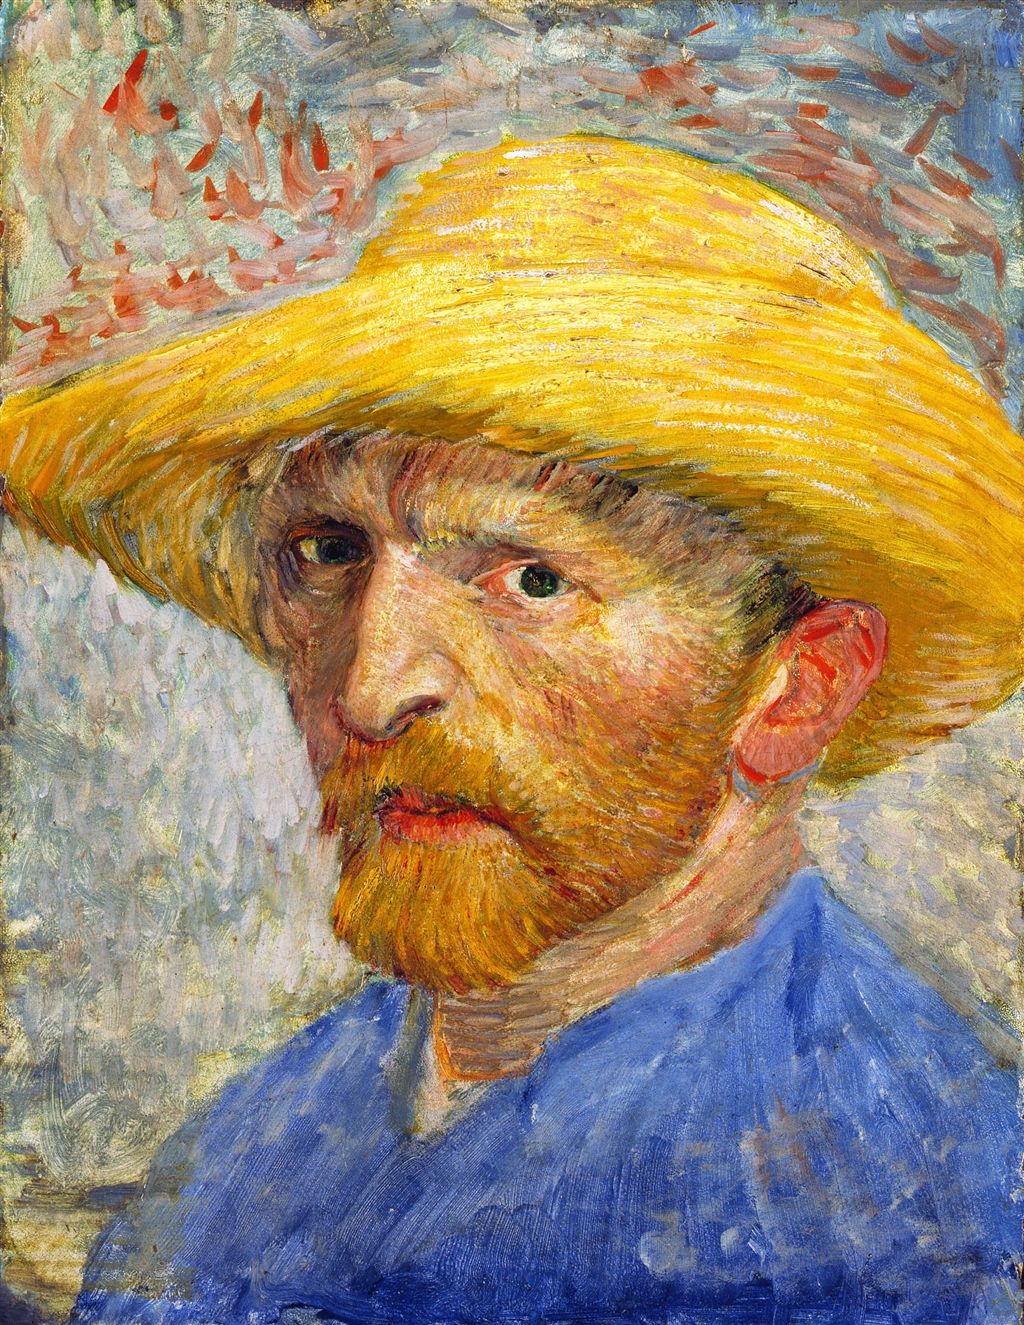 Pinturas de Van Gogh - (Pos-Impressionismo) Pintor Holandês